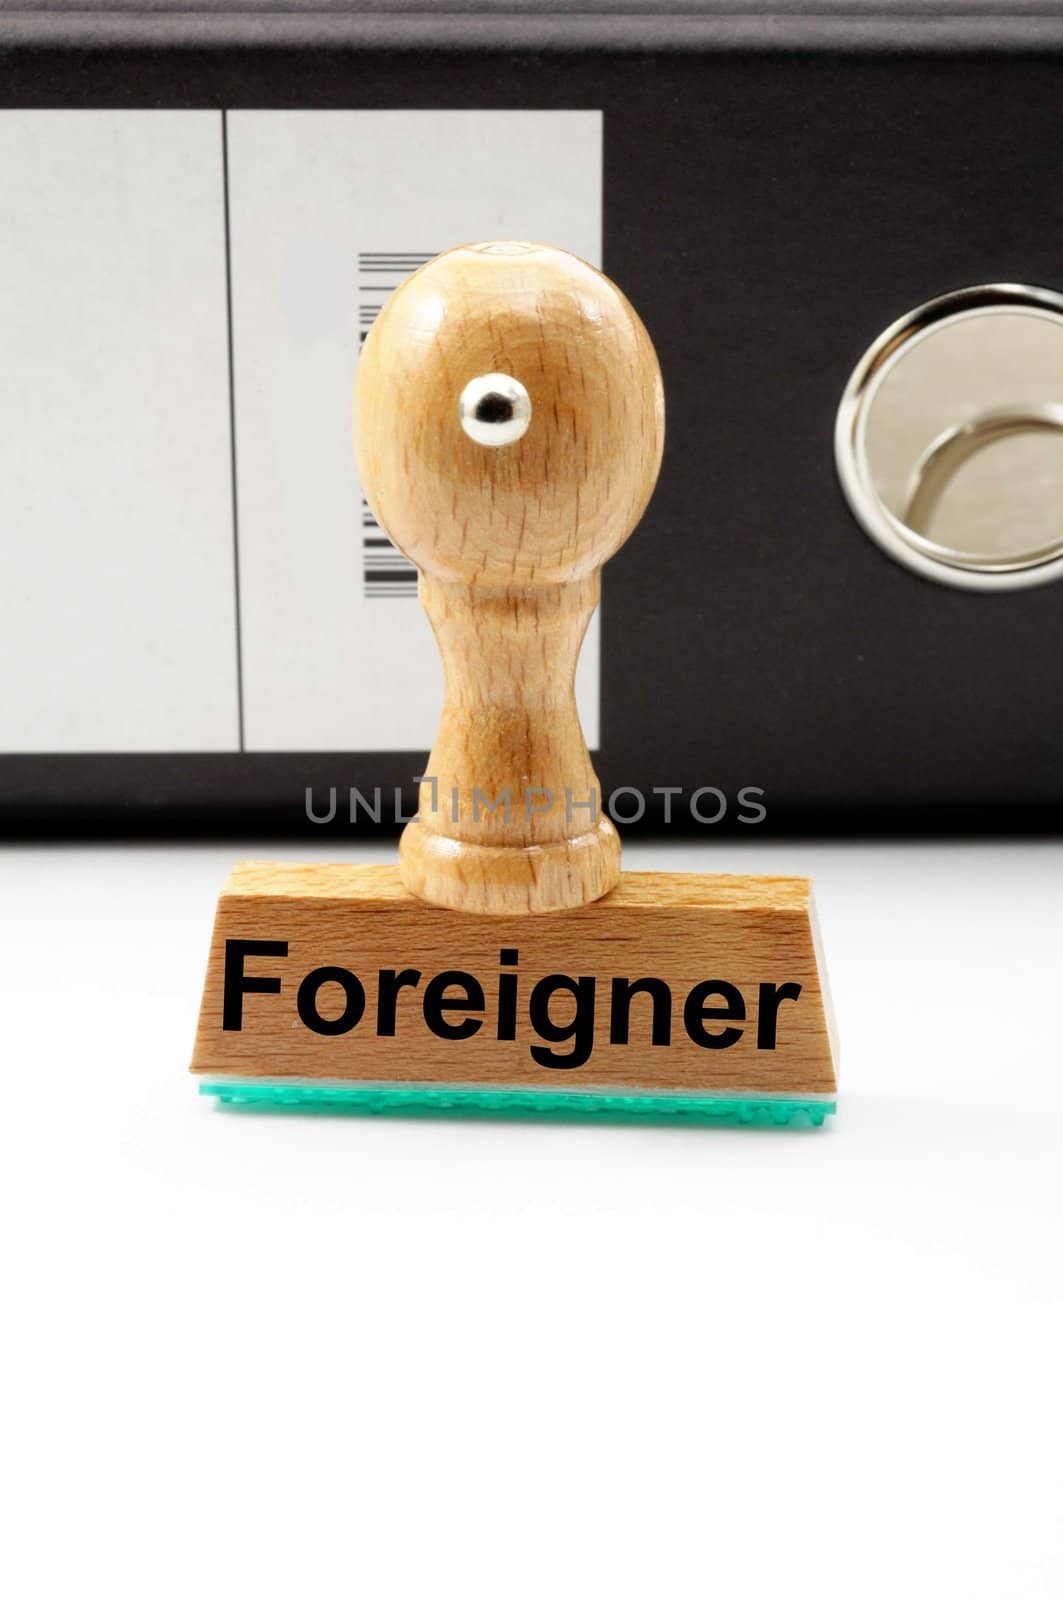 foreigner by gunnar3000